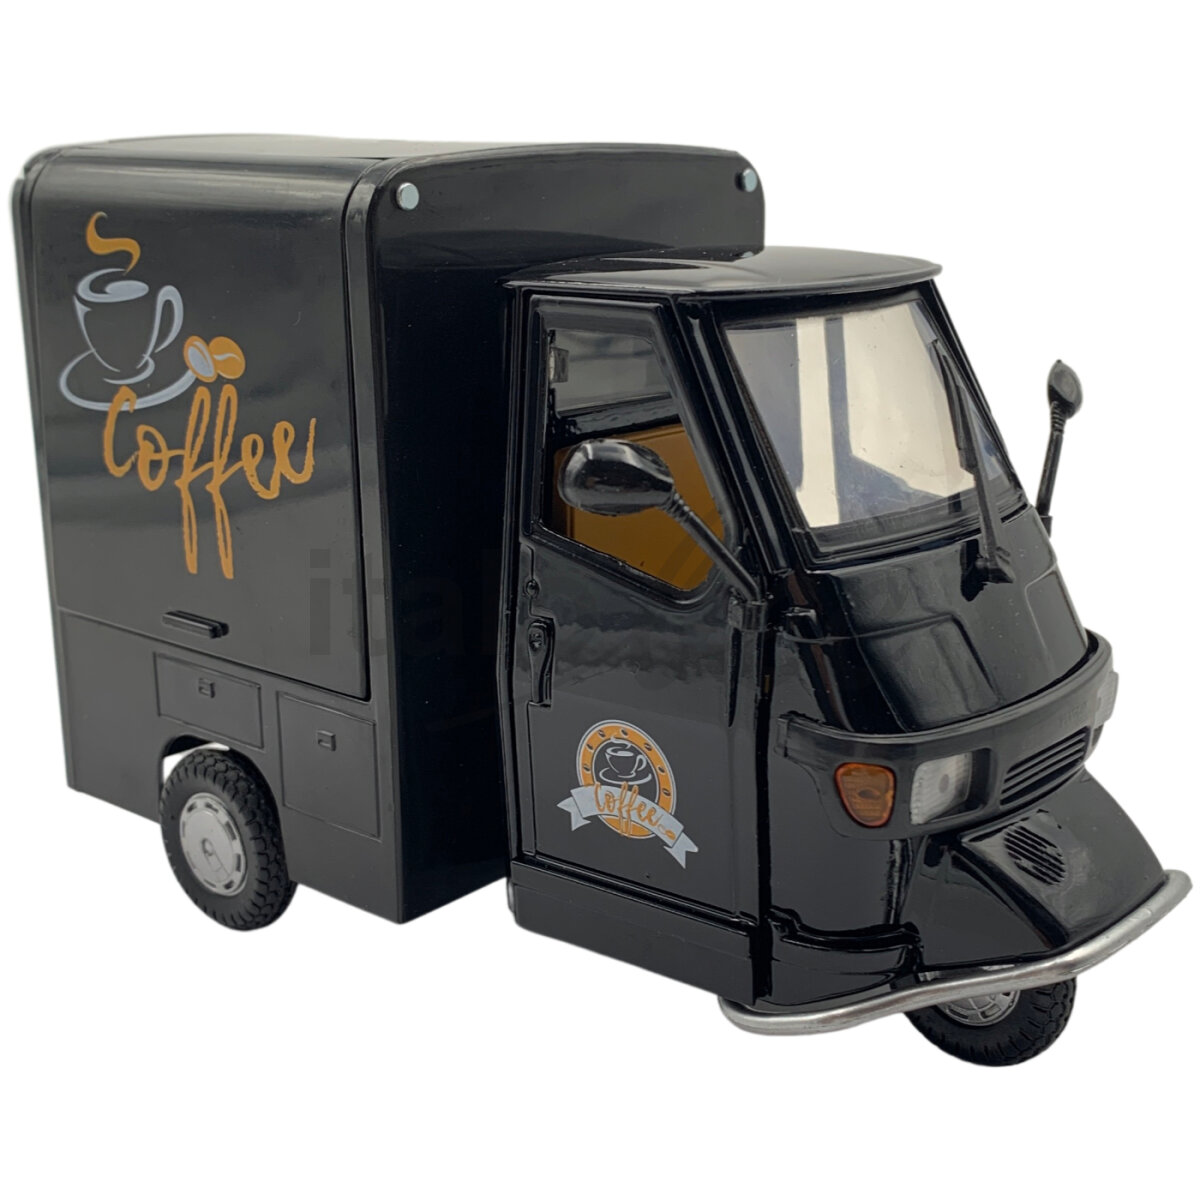 Modell 1:18 PIAGGIO APE 50 Kaffeemobil schwarz - italobee Shop, 39,00 €